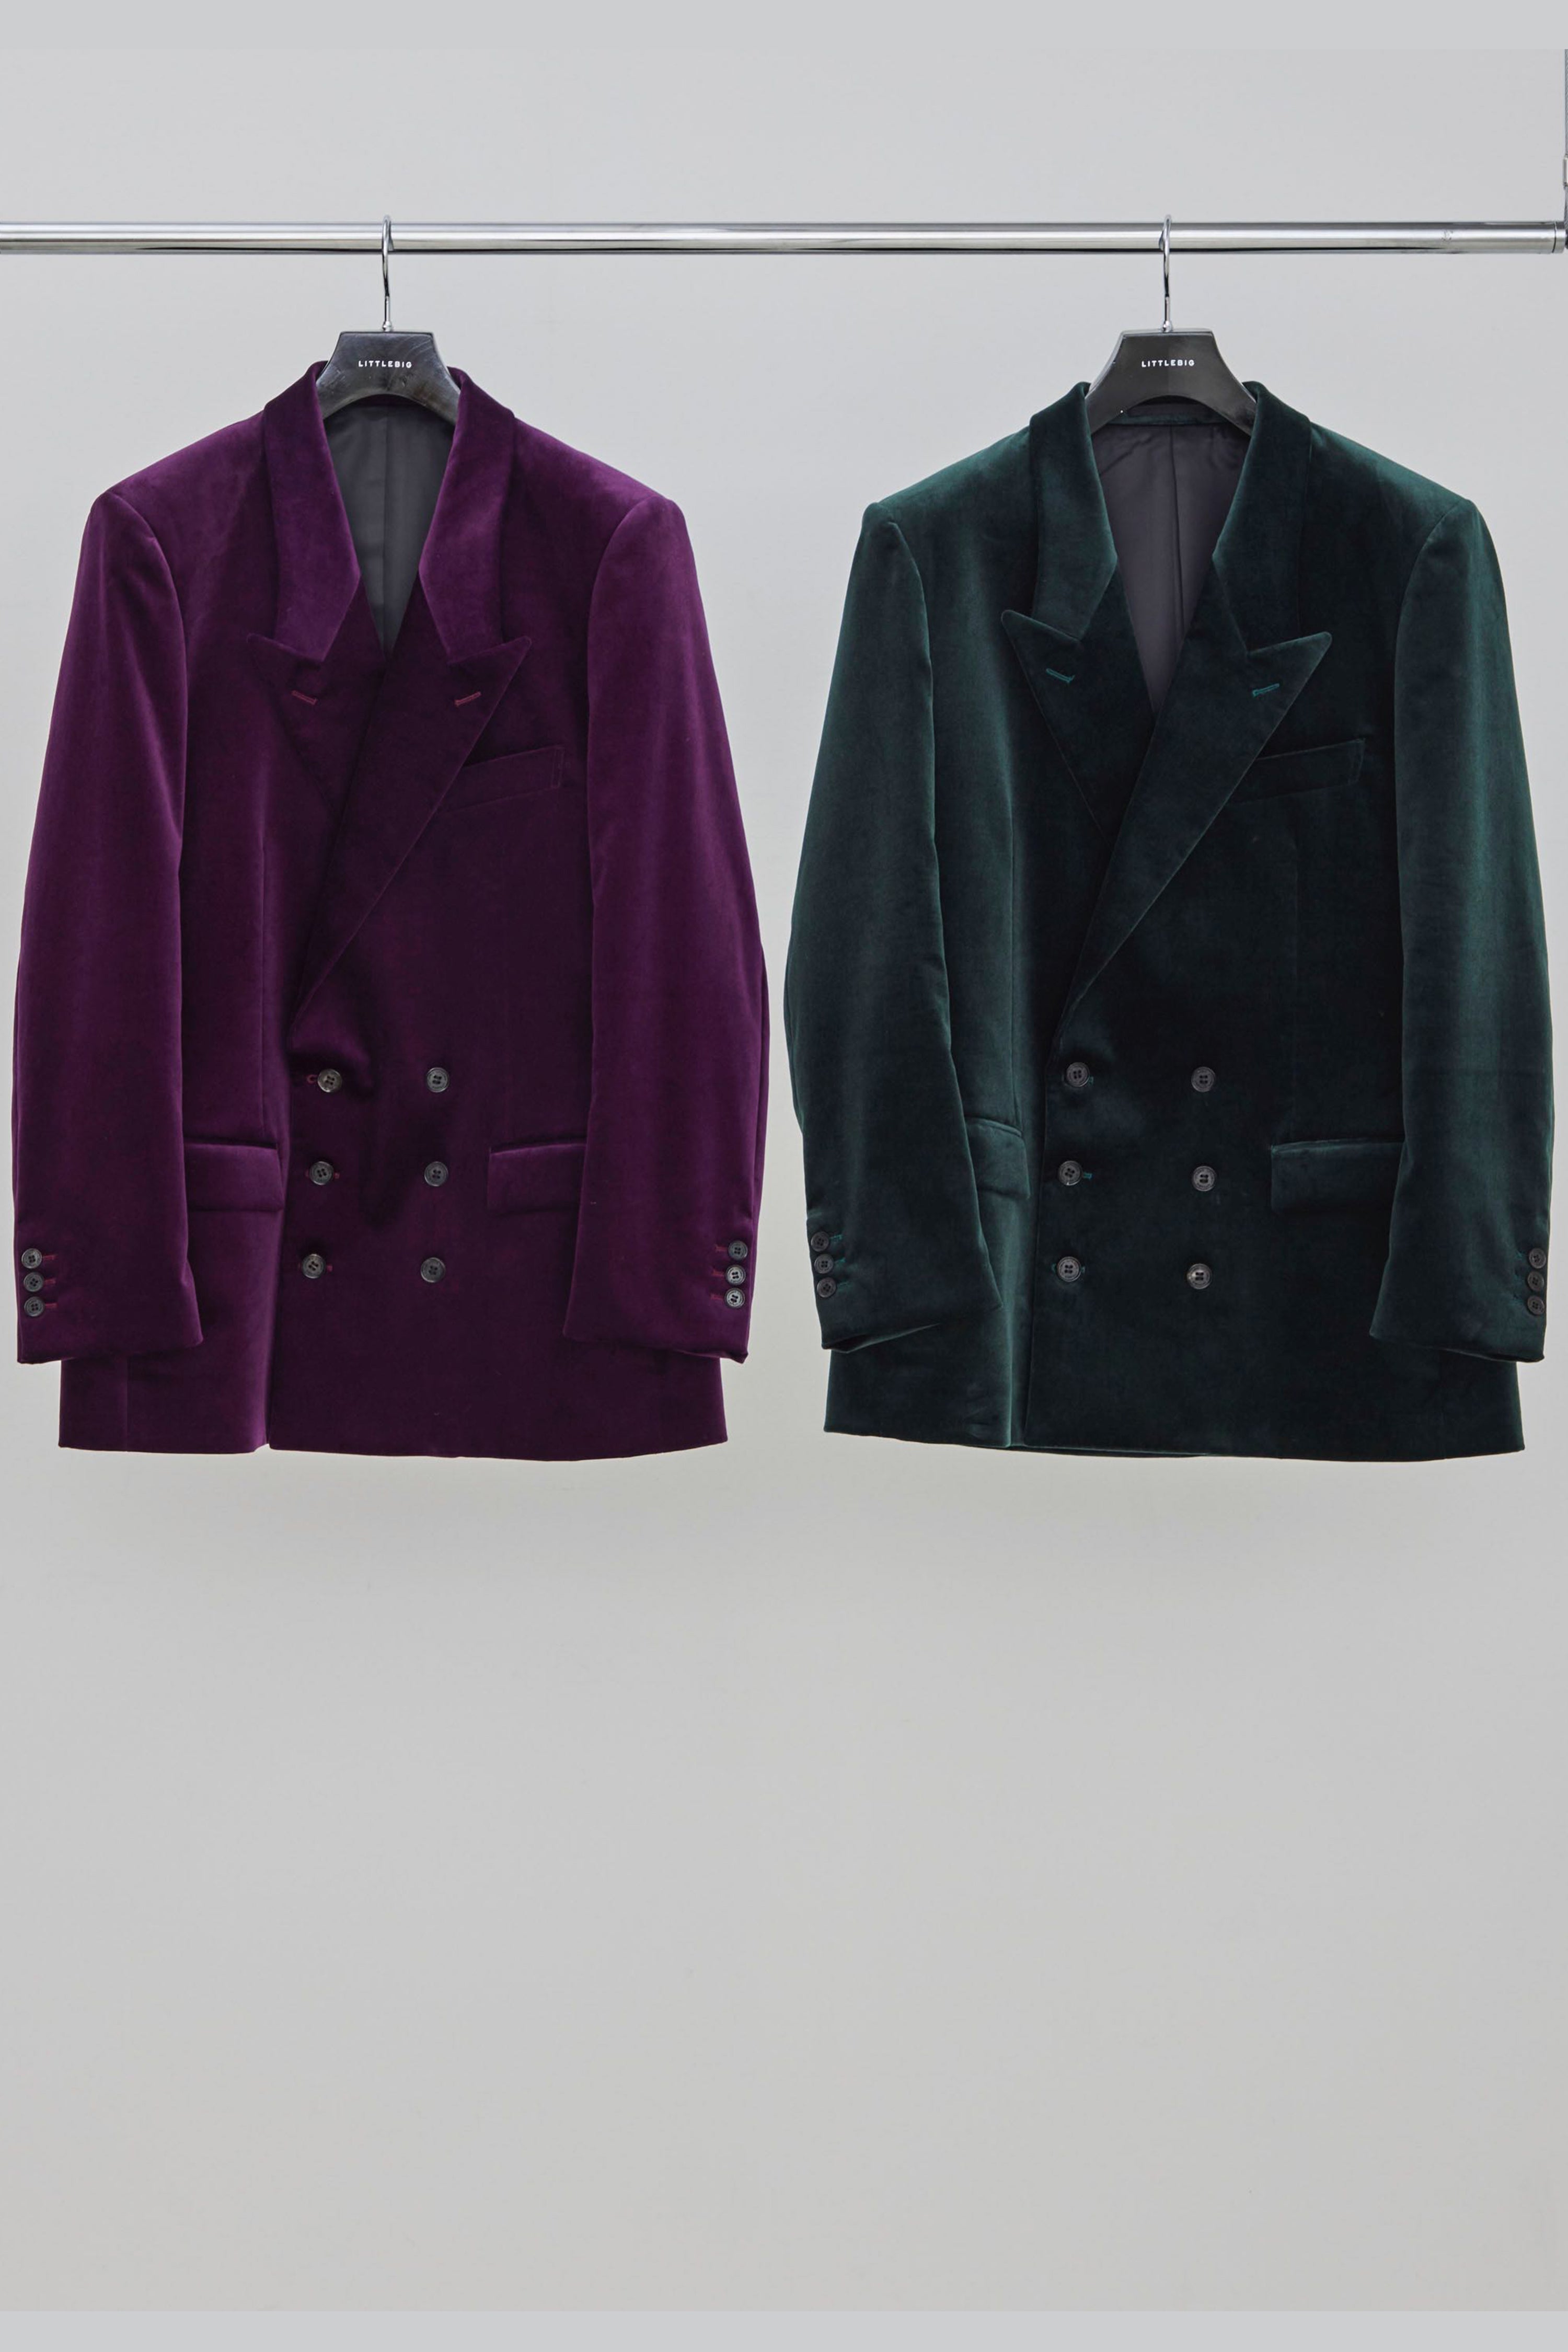 LITTLEBIG(リトルビッグ)のVelvet Jacket Purple or Green 